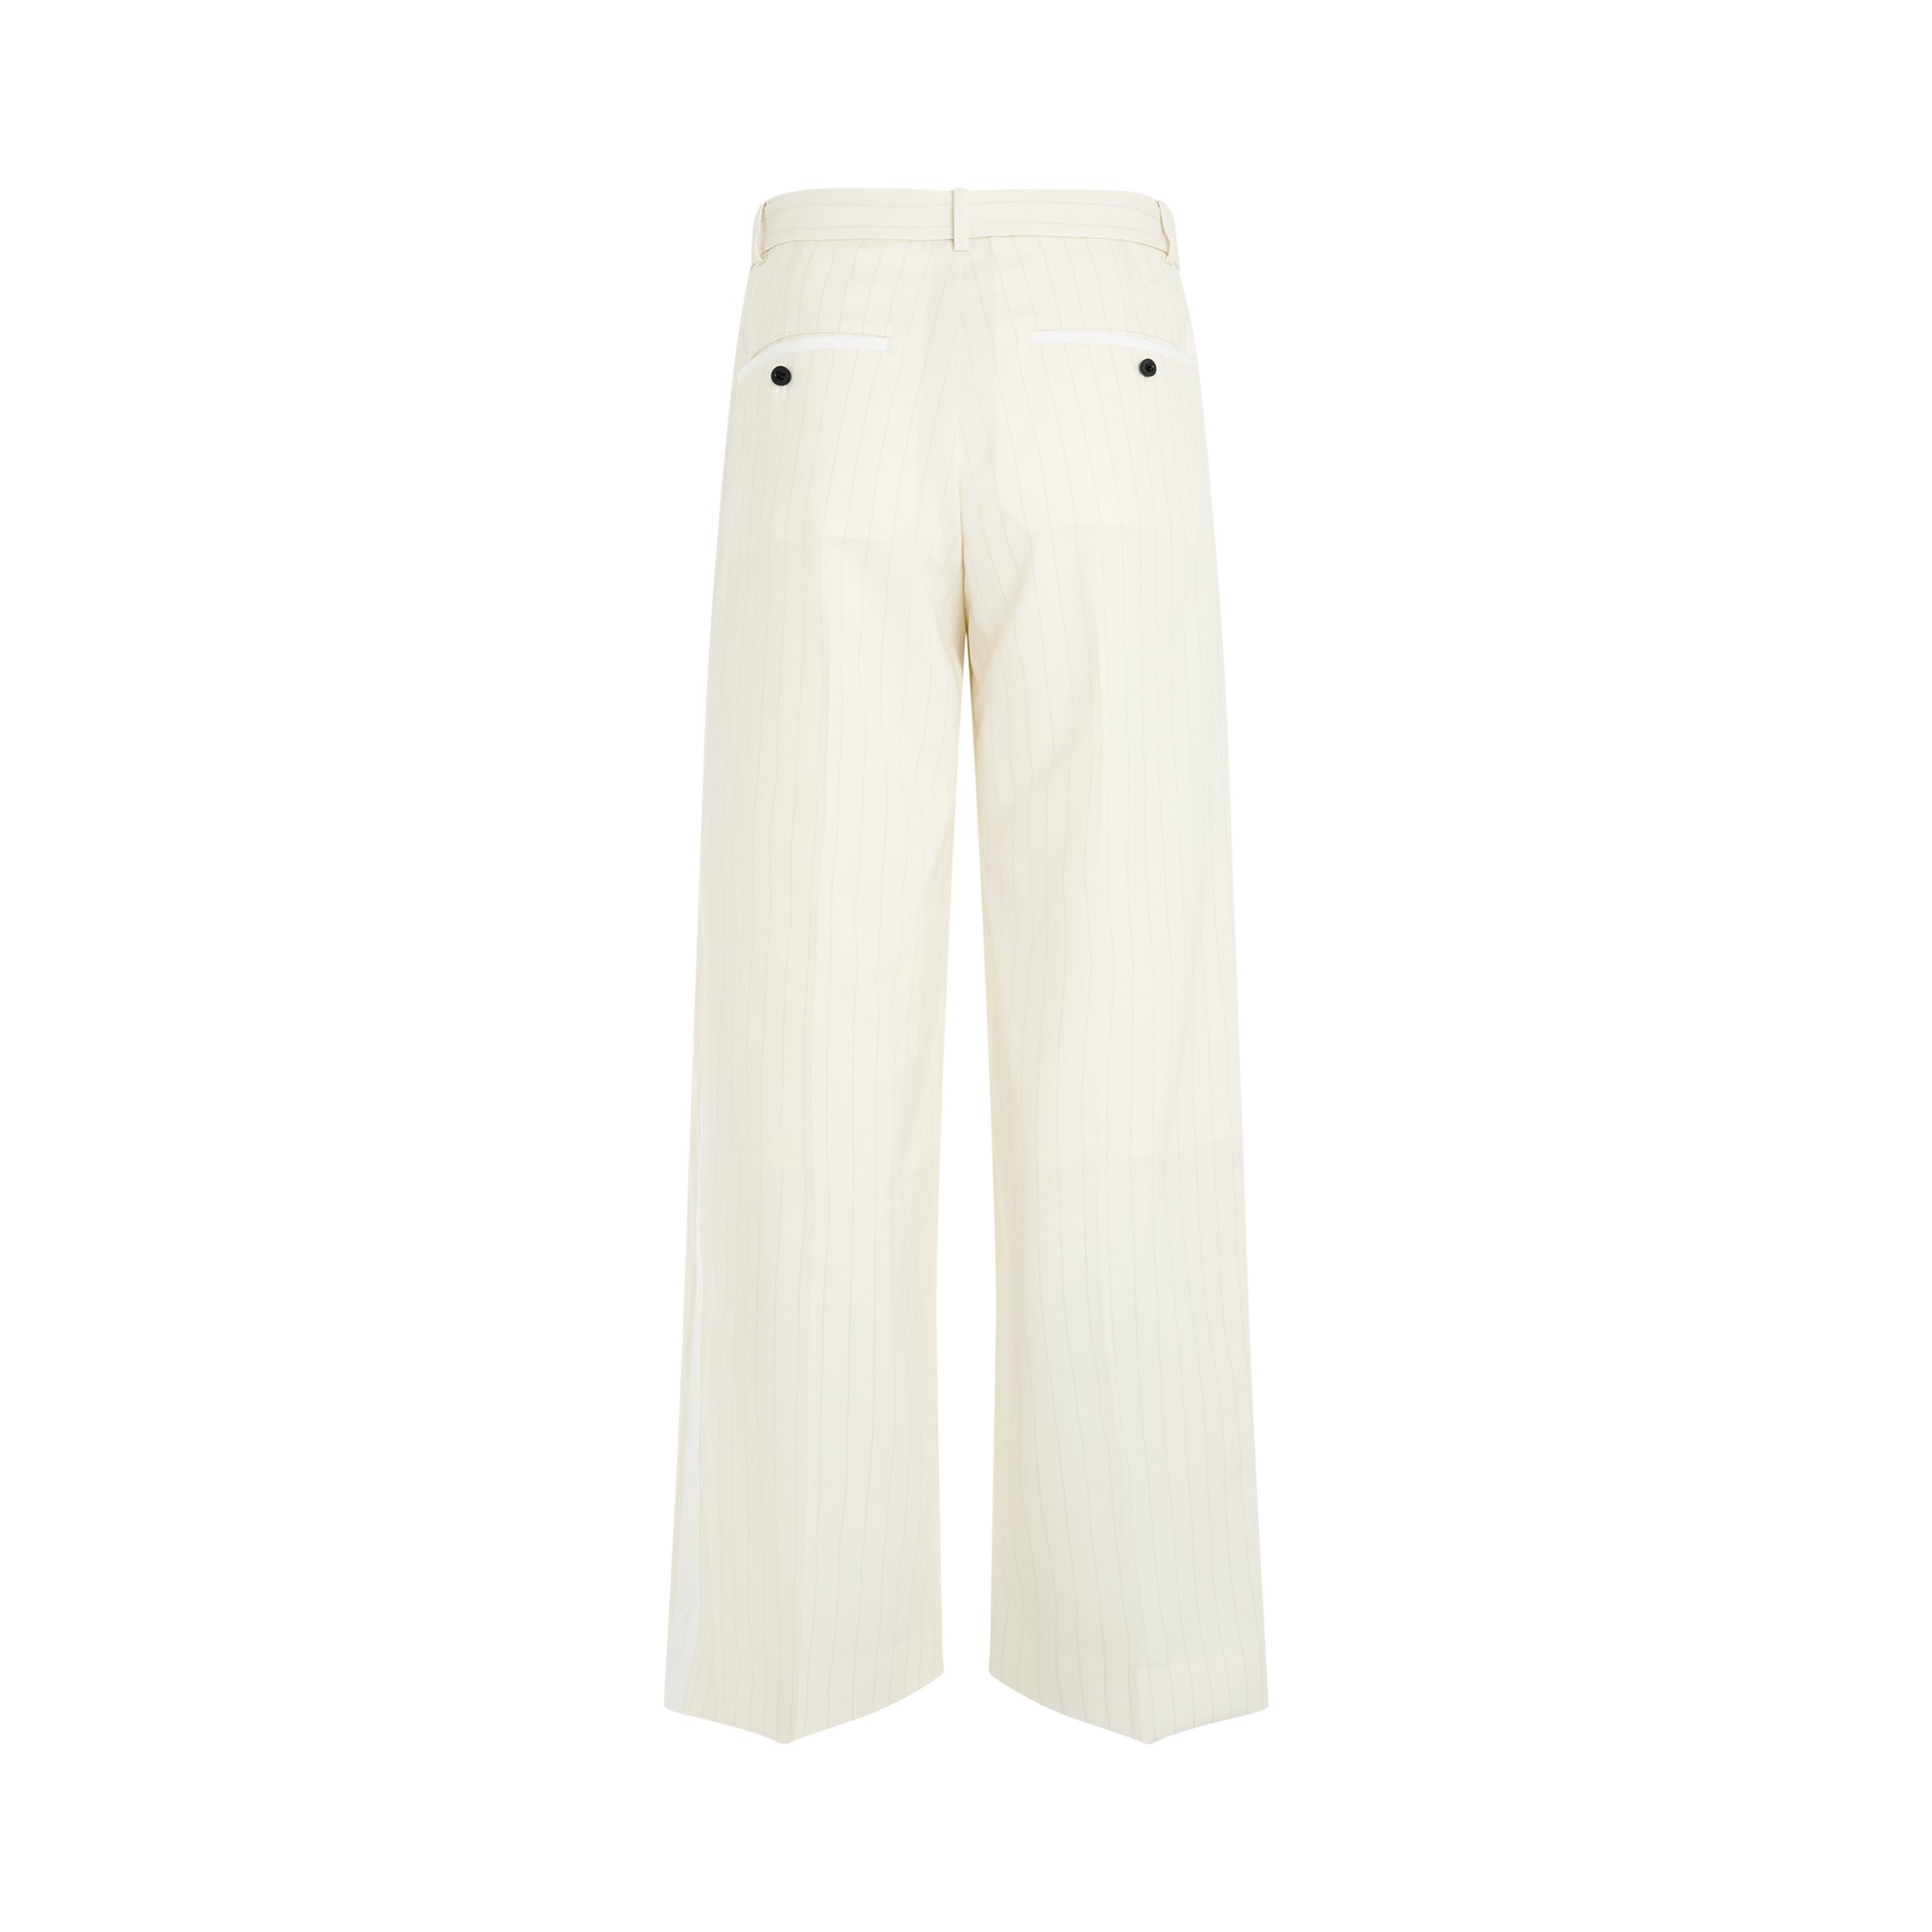 Chalk Stripe Pants in Off White - 4